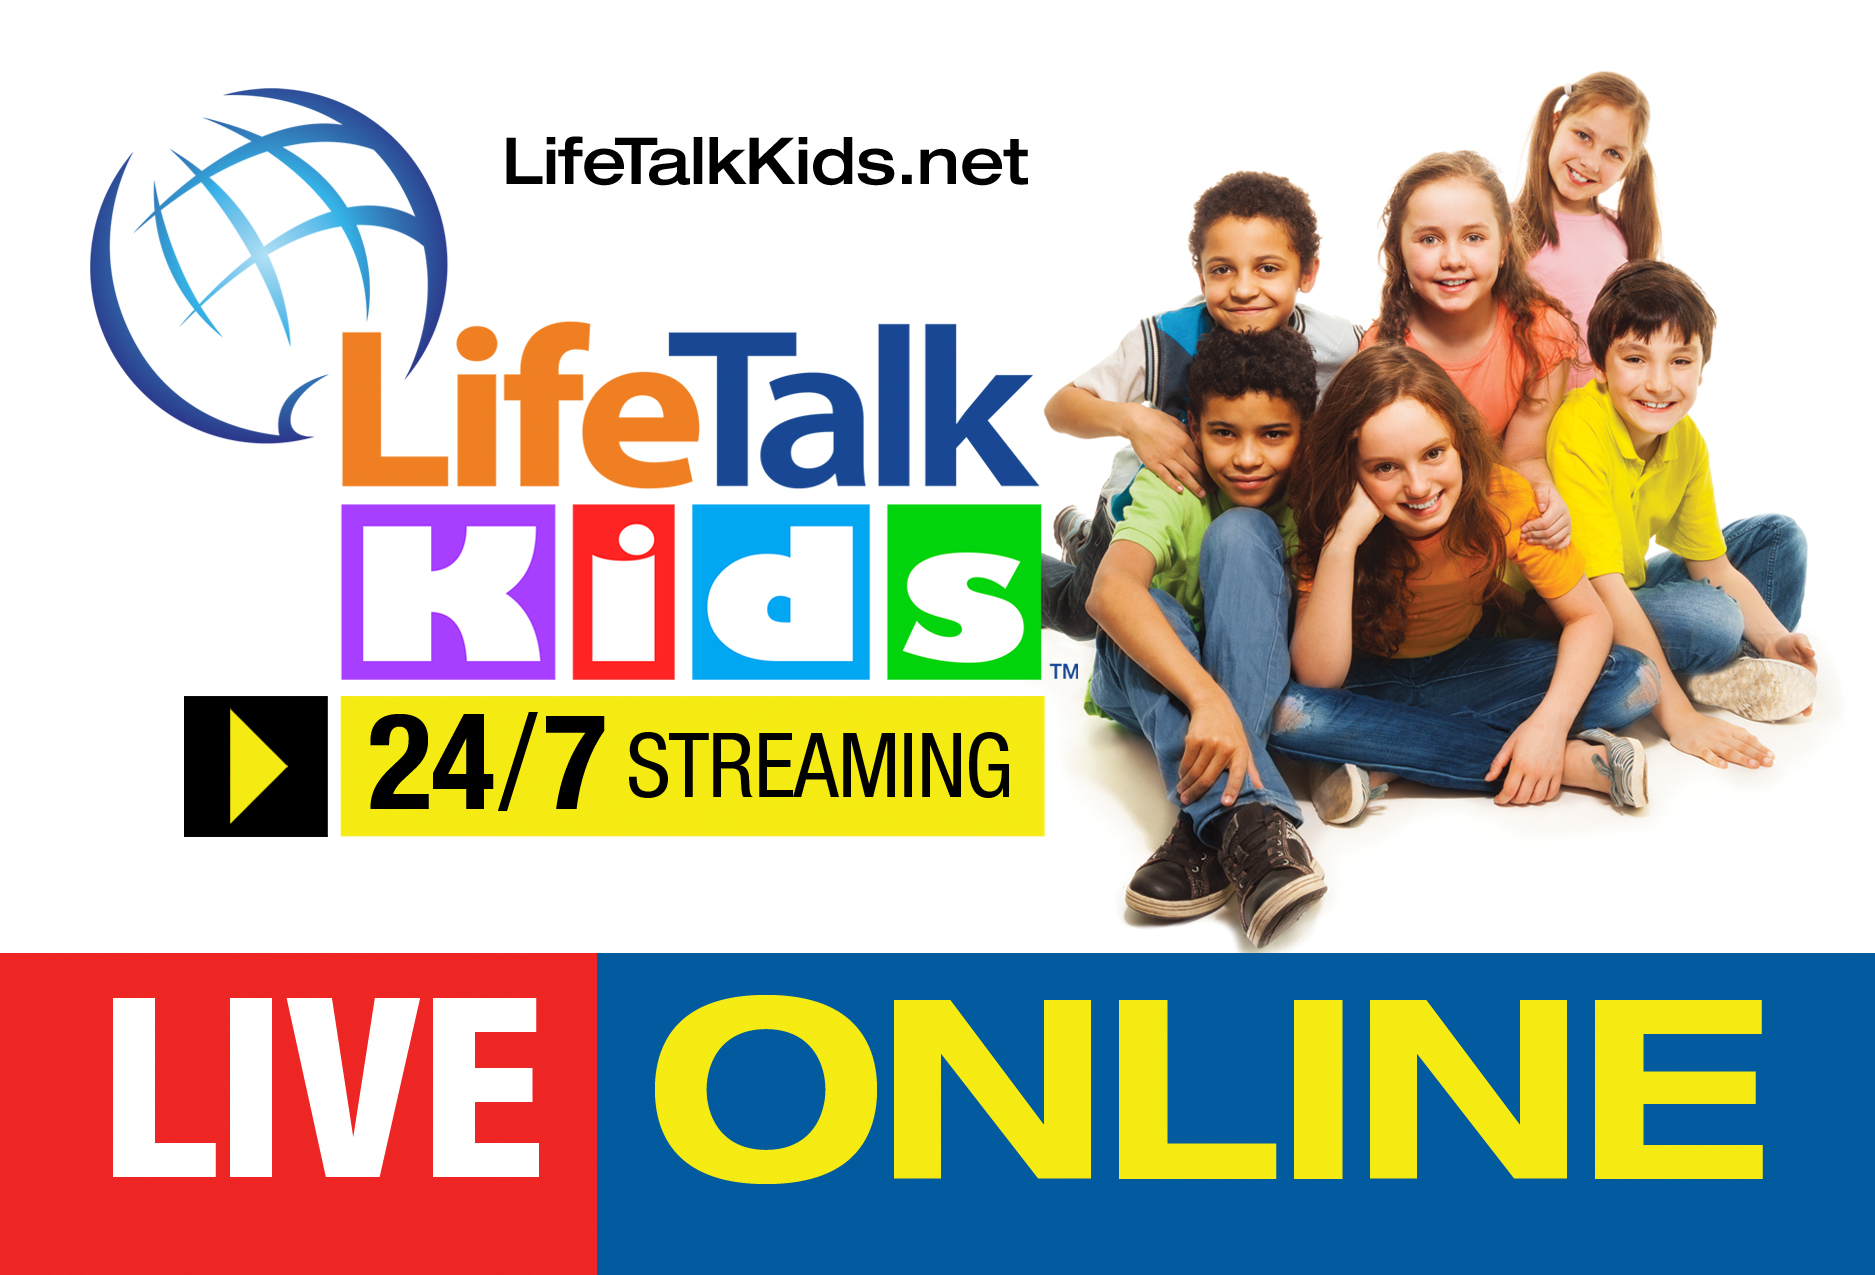 LifeTalkKids is now available on LifeTalk Radio